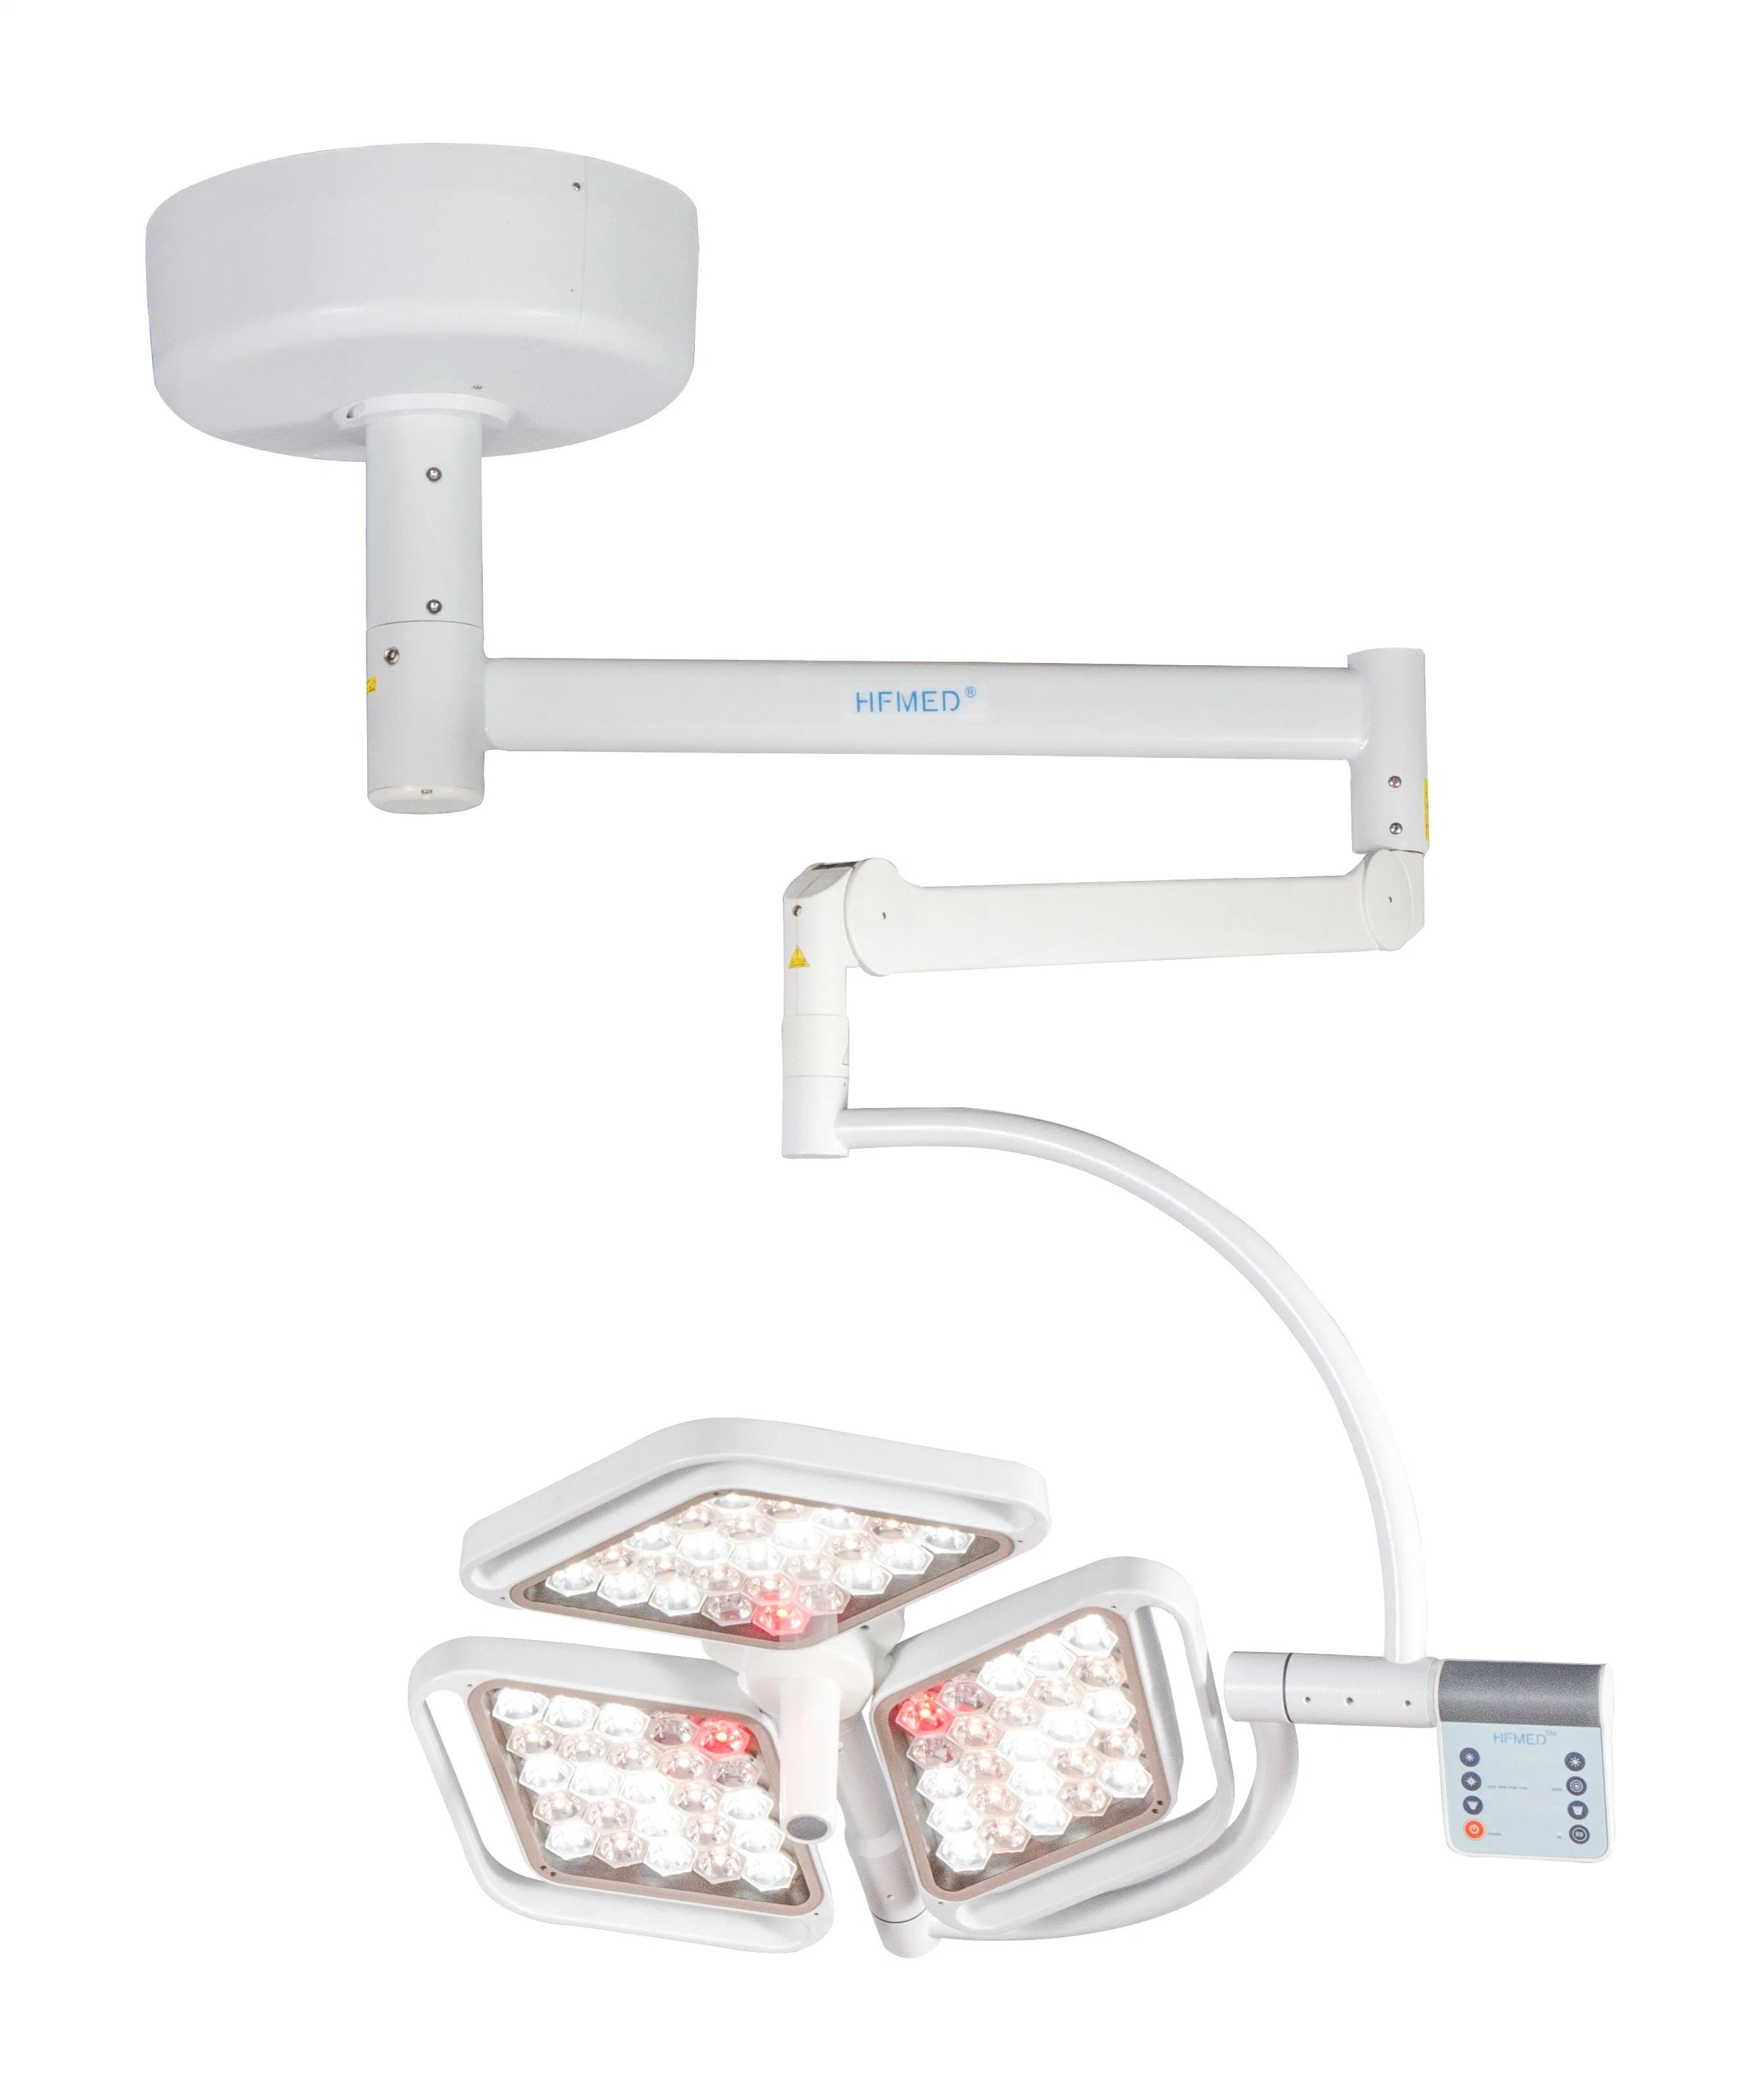 Kaschlose LED-Betriebslampe für den OP-Raum mit Sterilisator GRIFF (HF-L3 LED)